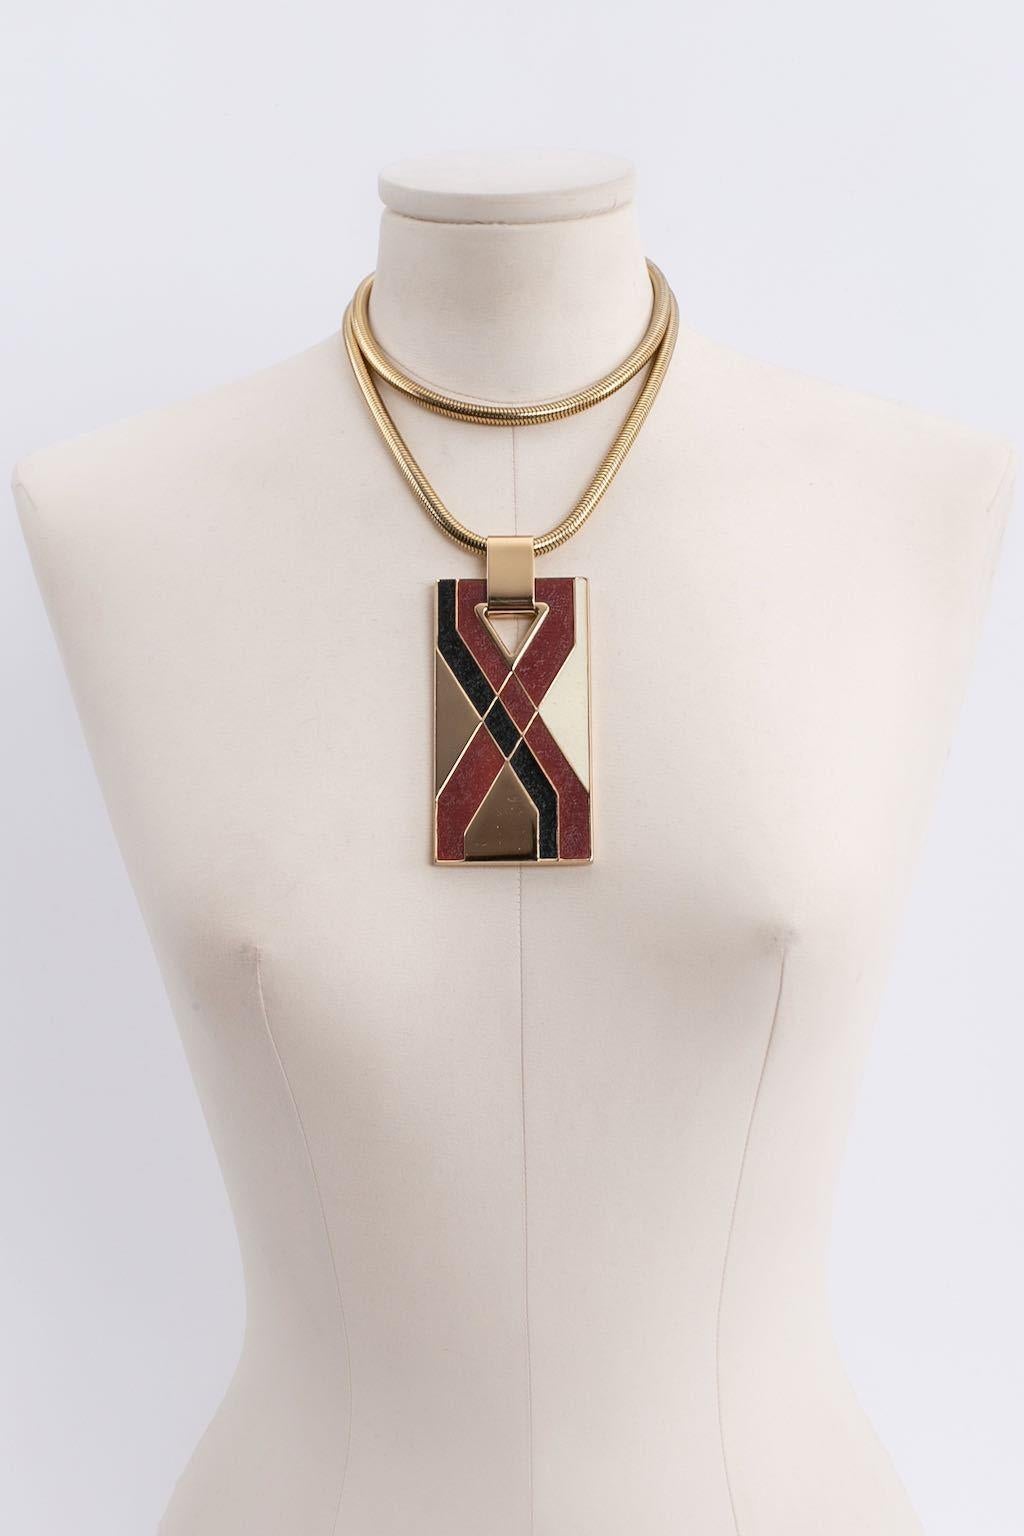 Lanvin Gilded Metal Pendant Necklace In Good Condition For Sale In SAINT-OUEN-SUR-SEINE, FR